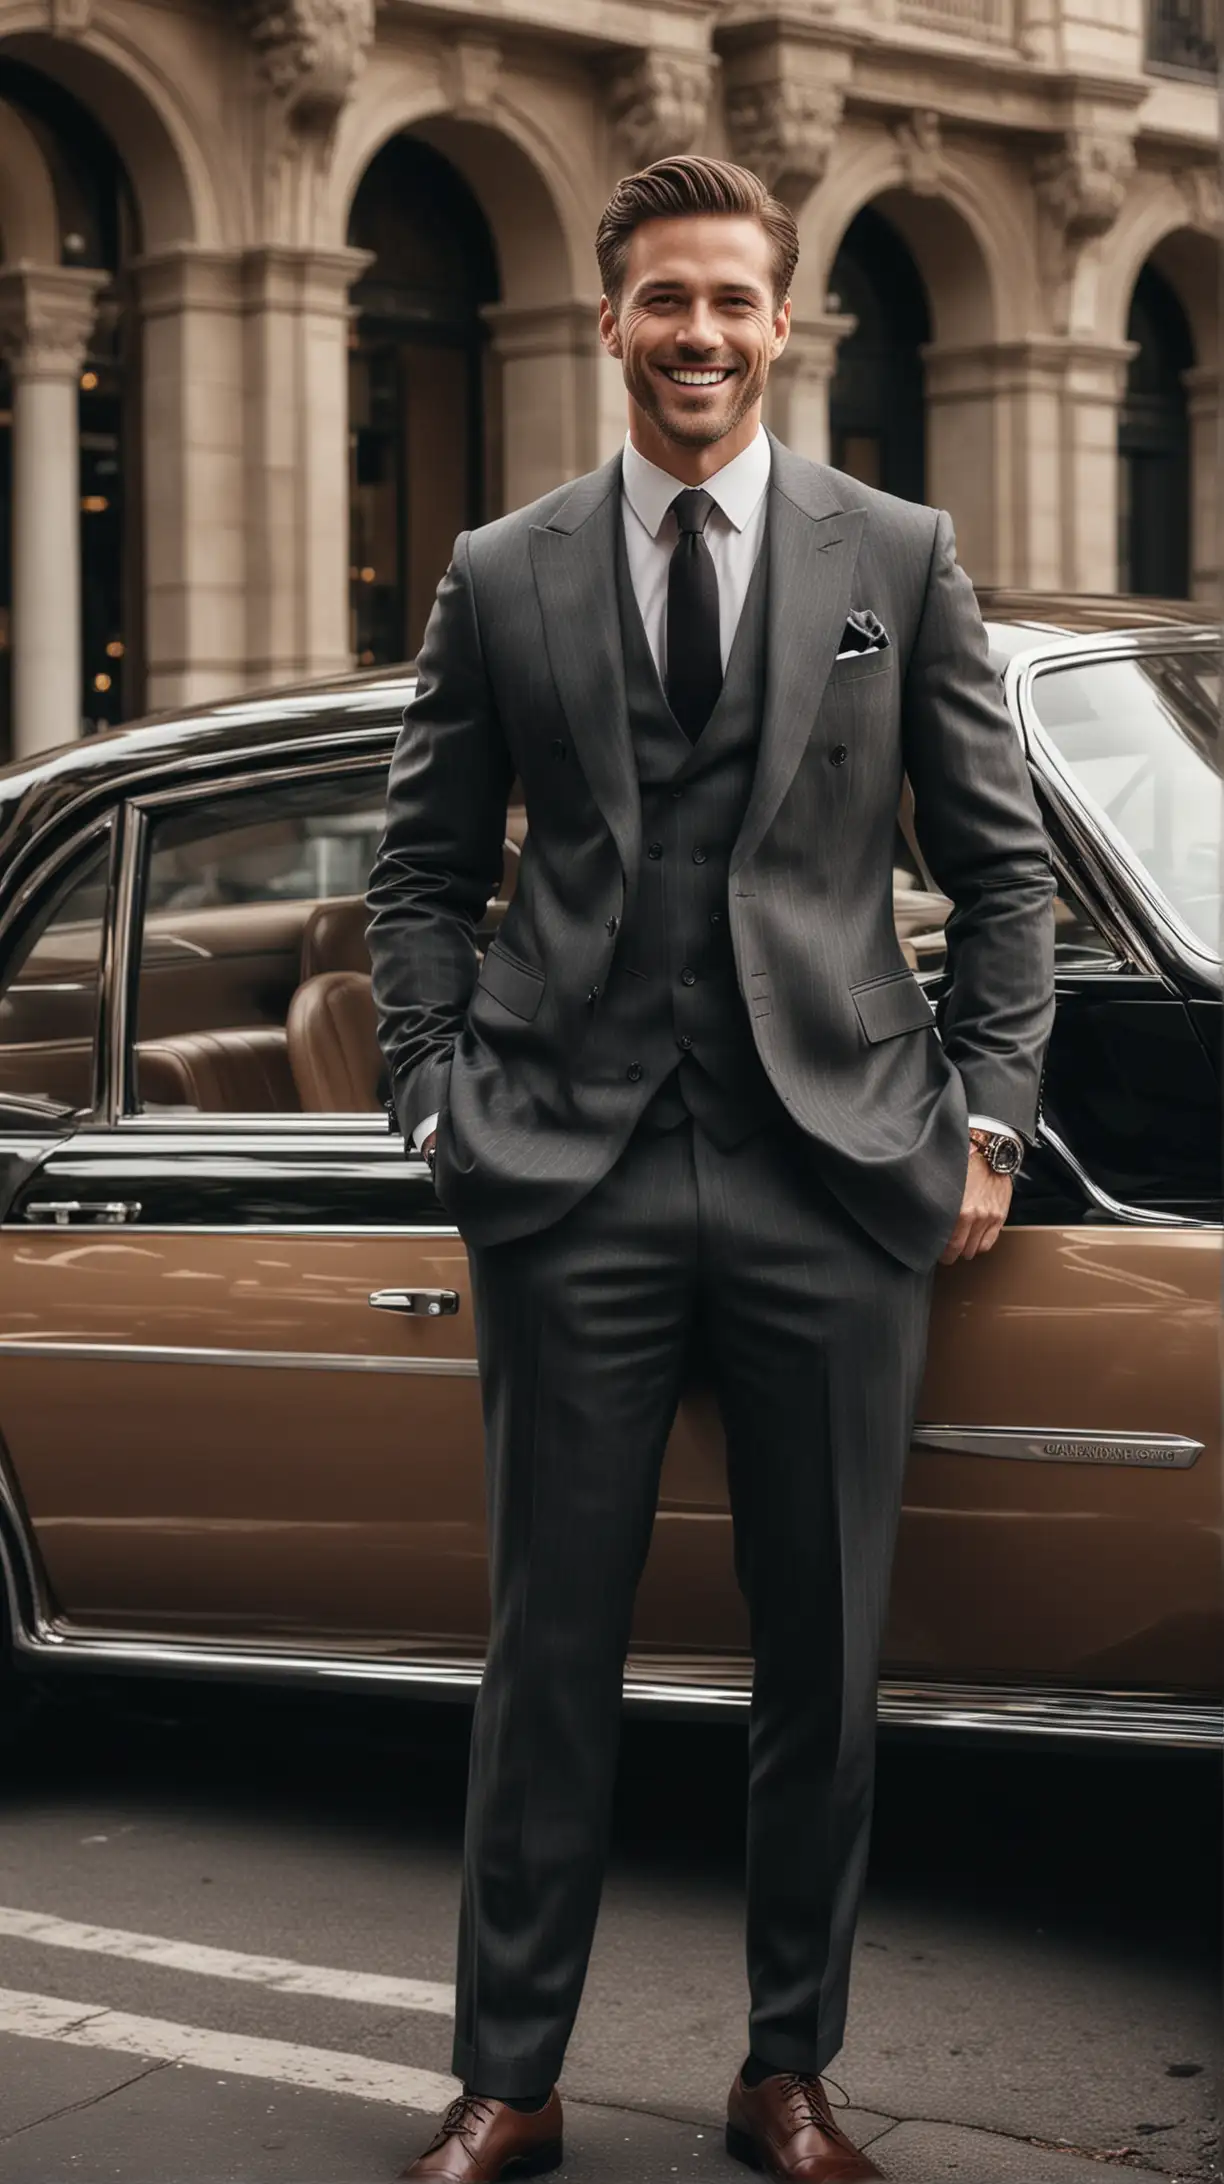 Elegant Gentleman in Luxury Suit Posing Confidently by a Classic Sedan